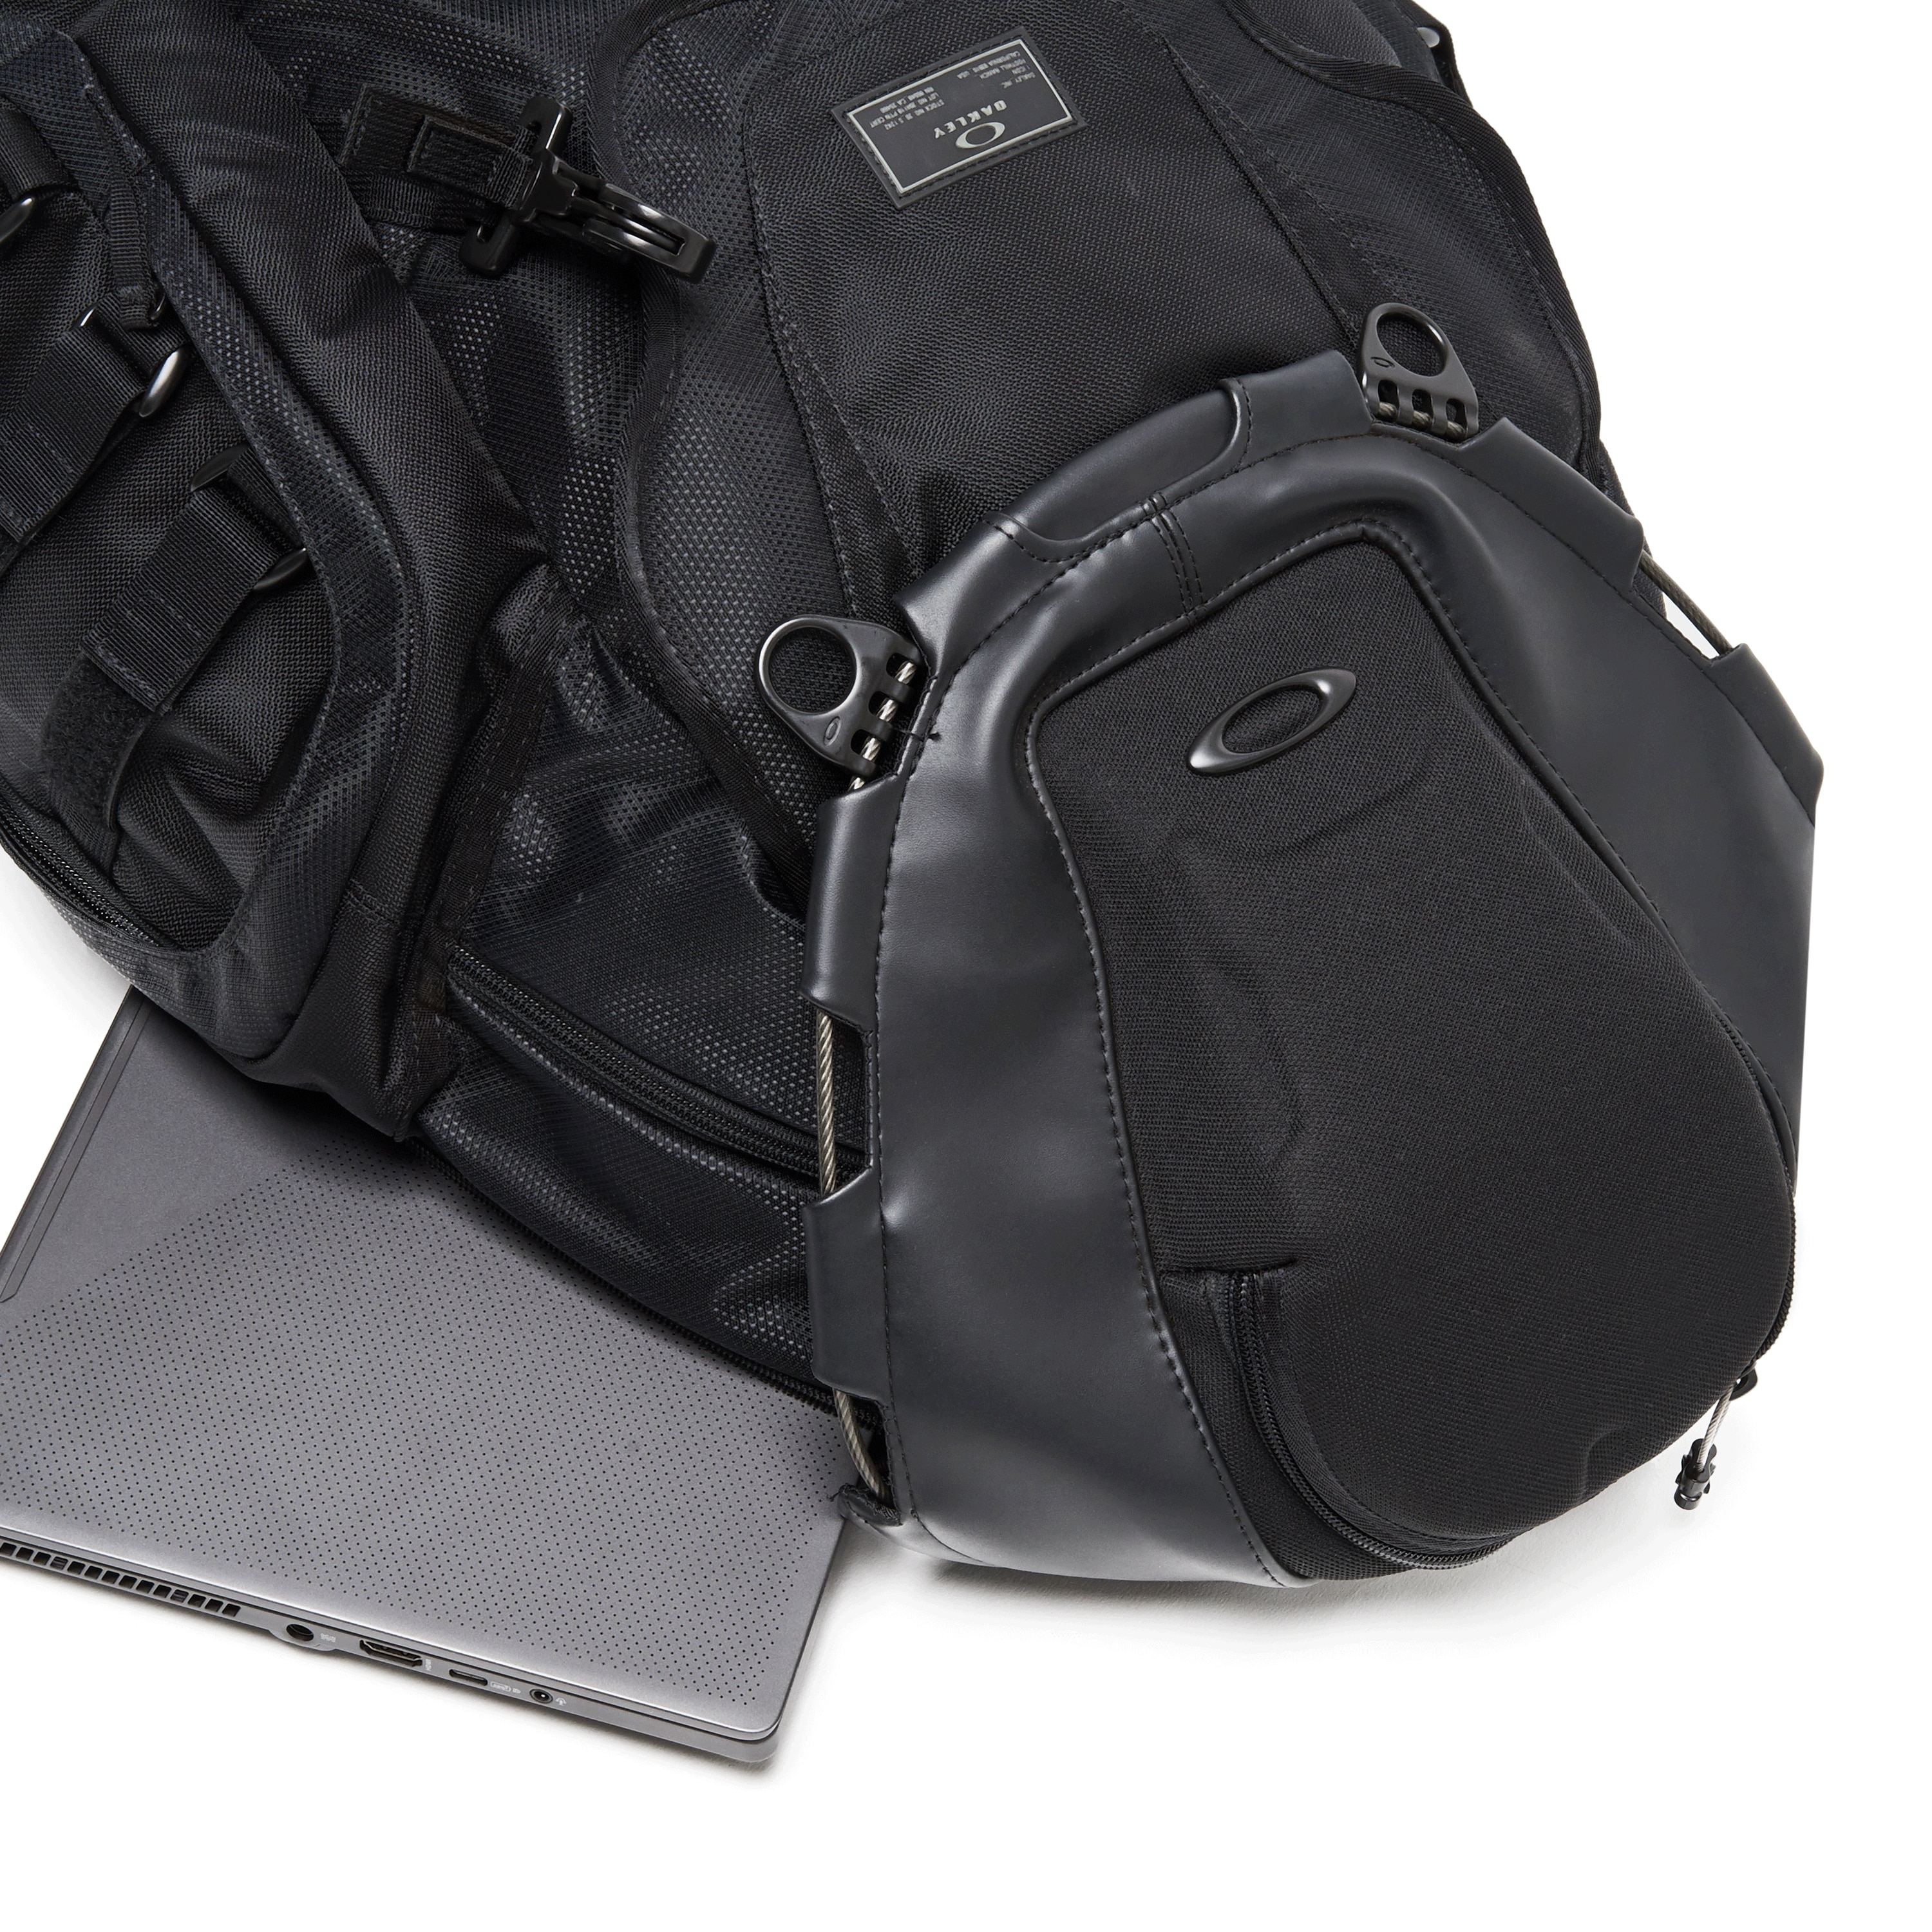 oakley leather backpack